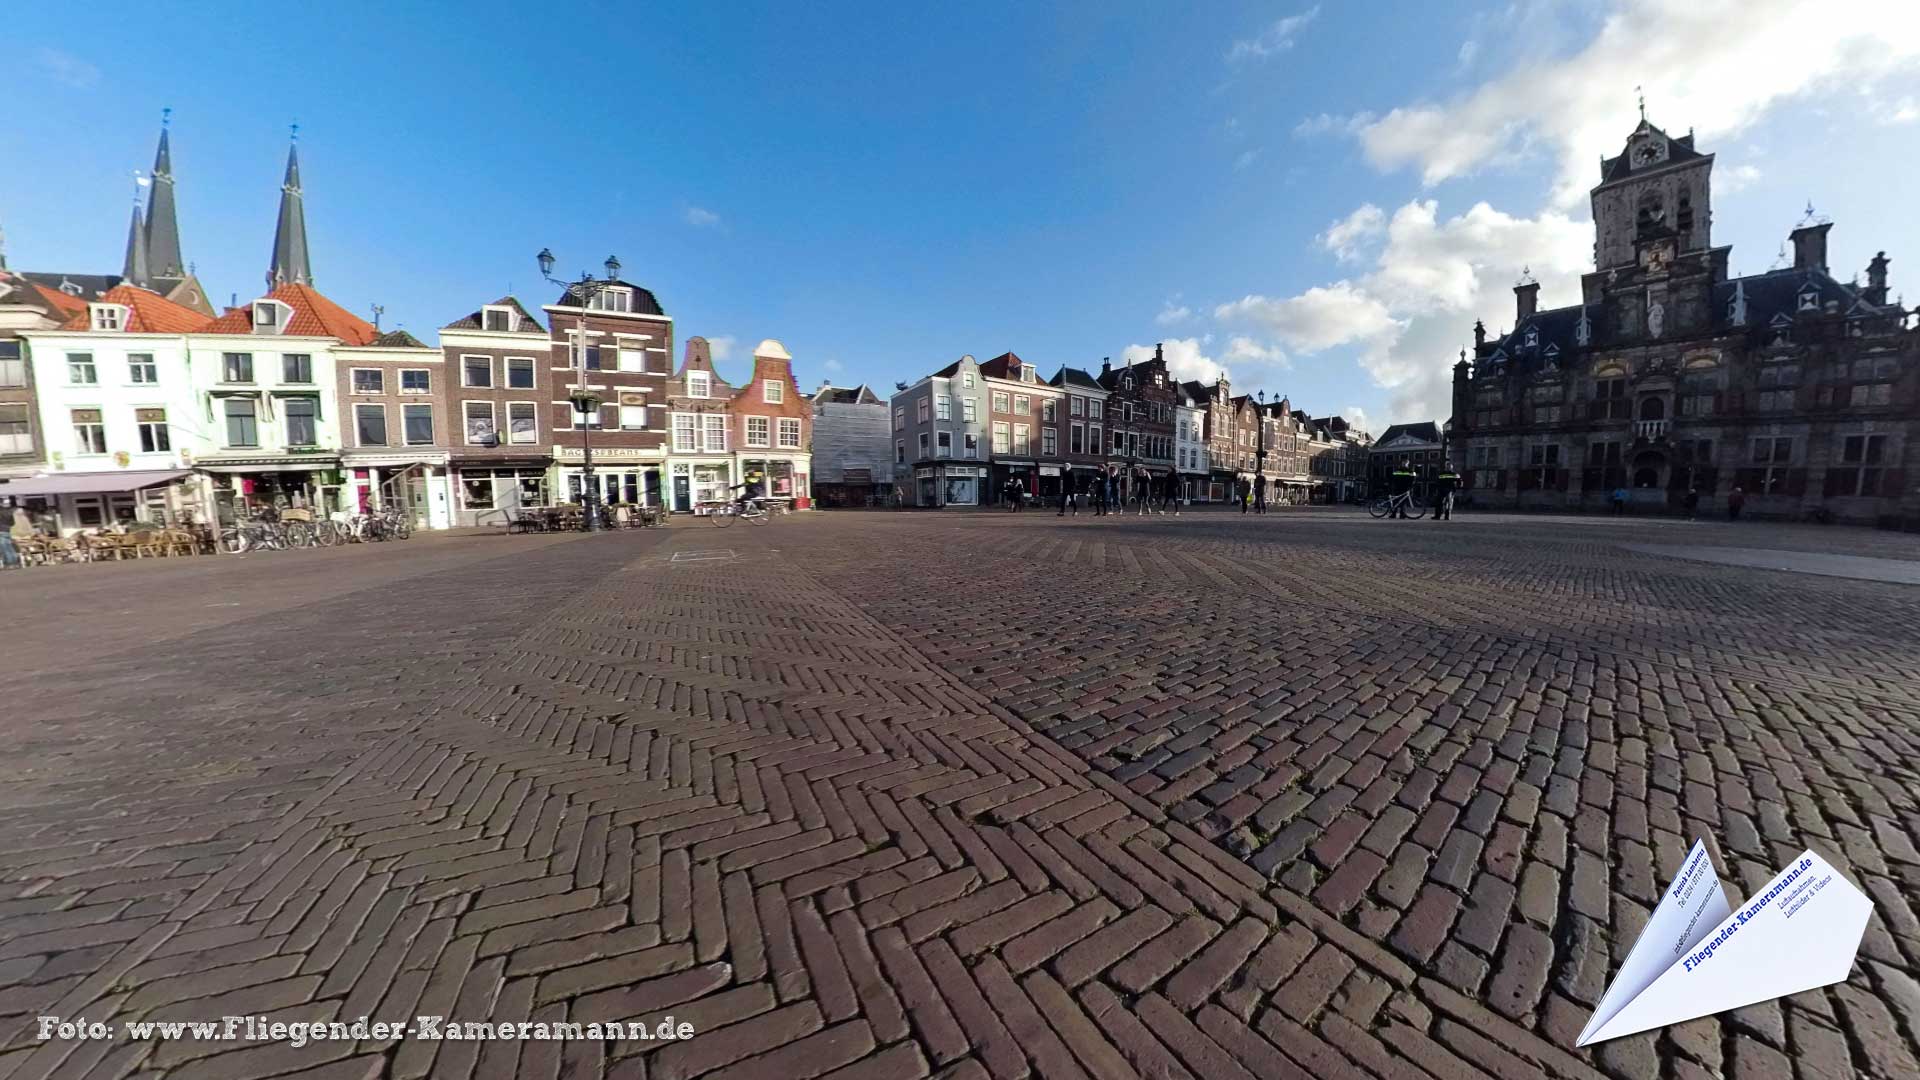 Nieuwe Kerk / Market / Stadhuis in Delft (NL) - 360°-Panorama